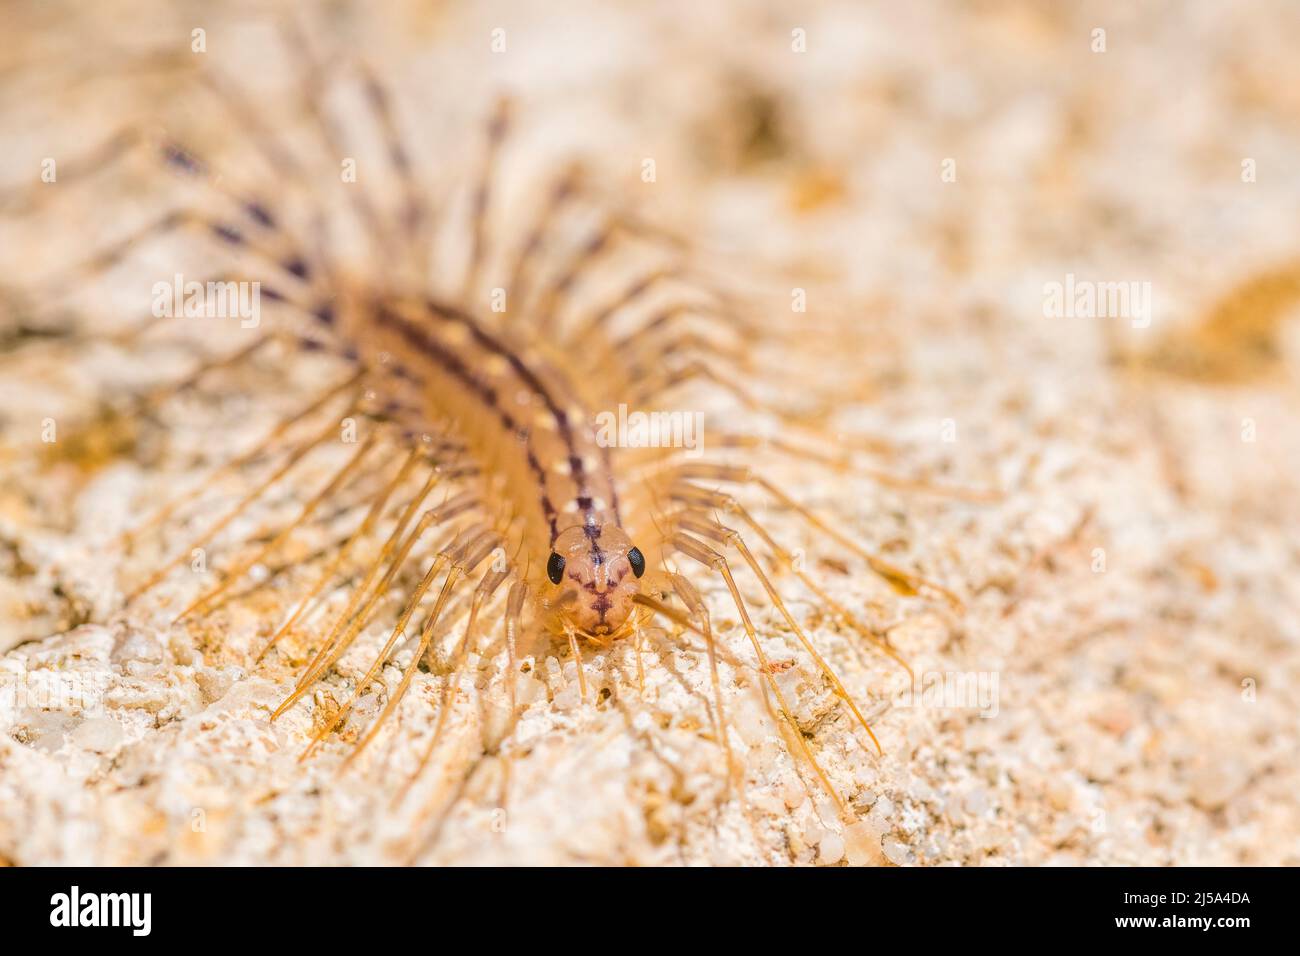 House centipede (Scutigera coleoptrata). Stock Photo